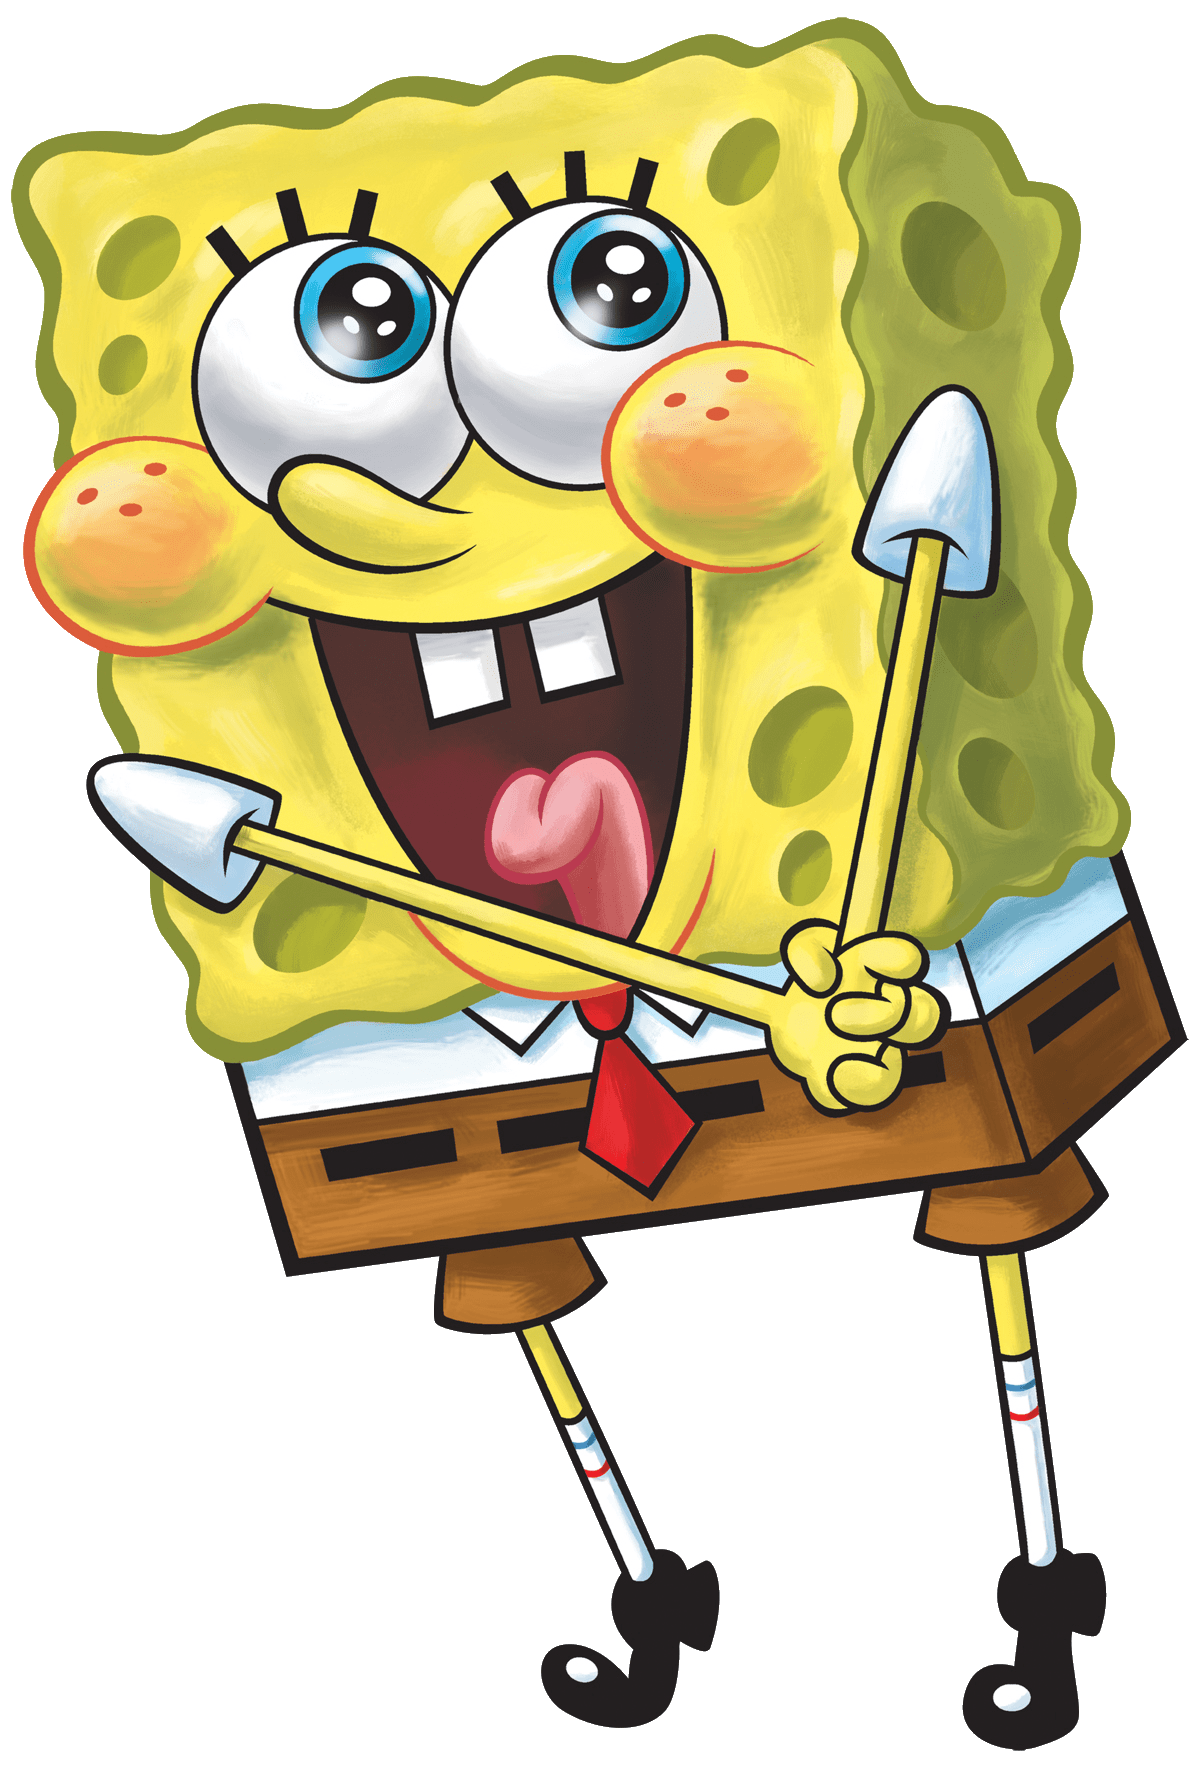 Immagini carine spongebob png - PNG All